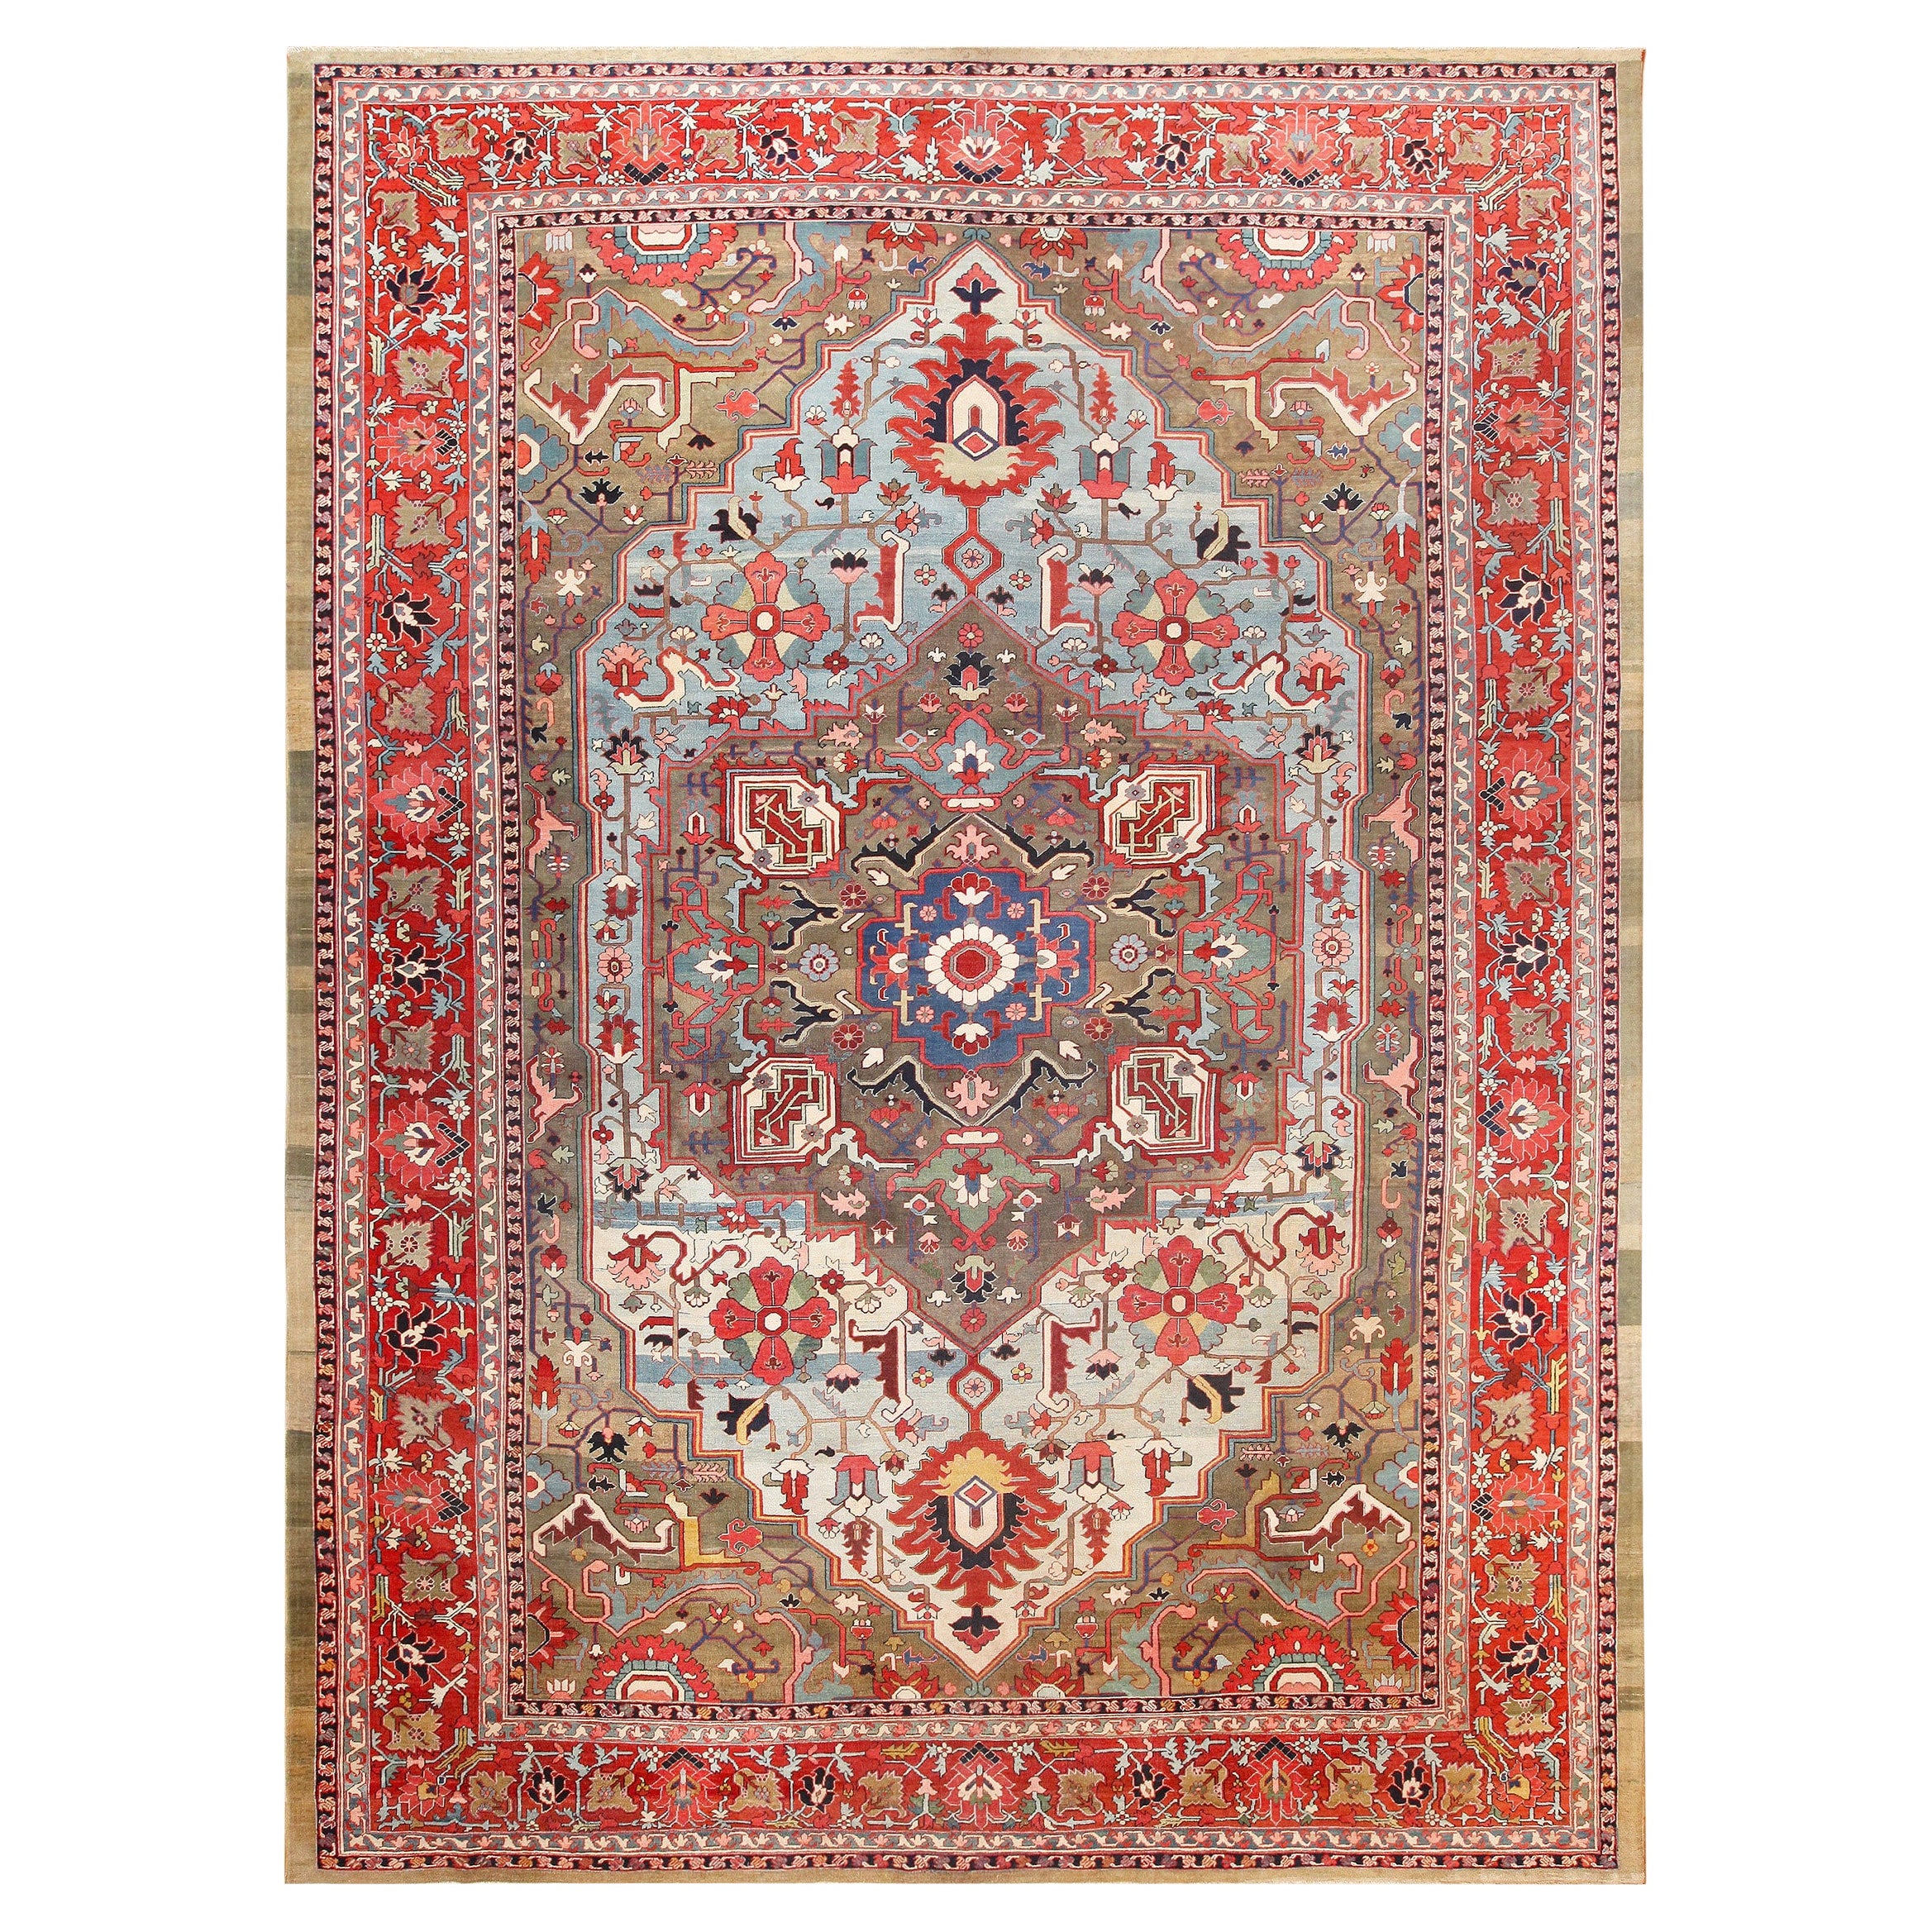 Antique Persian Heriz Serapi Carpet. Size: 12' 6" x 17' 6"